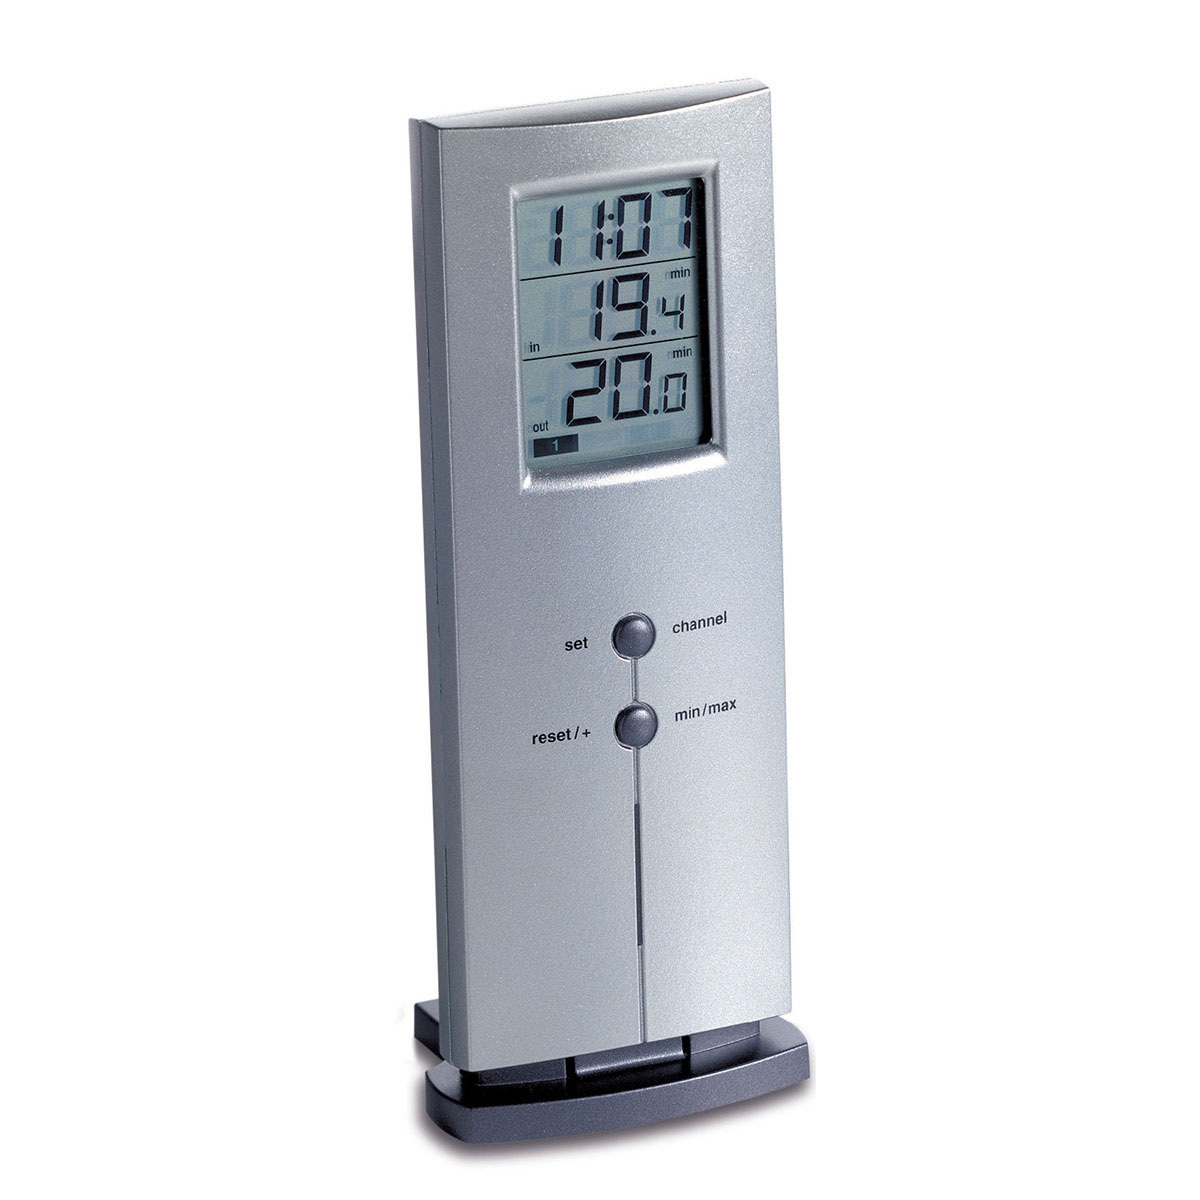 30-3009-54-it-funk-thermometer-logo-1200x1200px.jpg